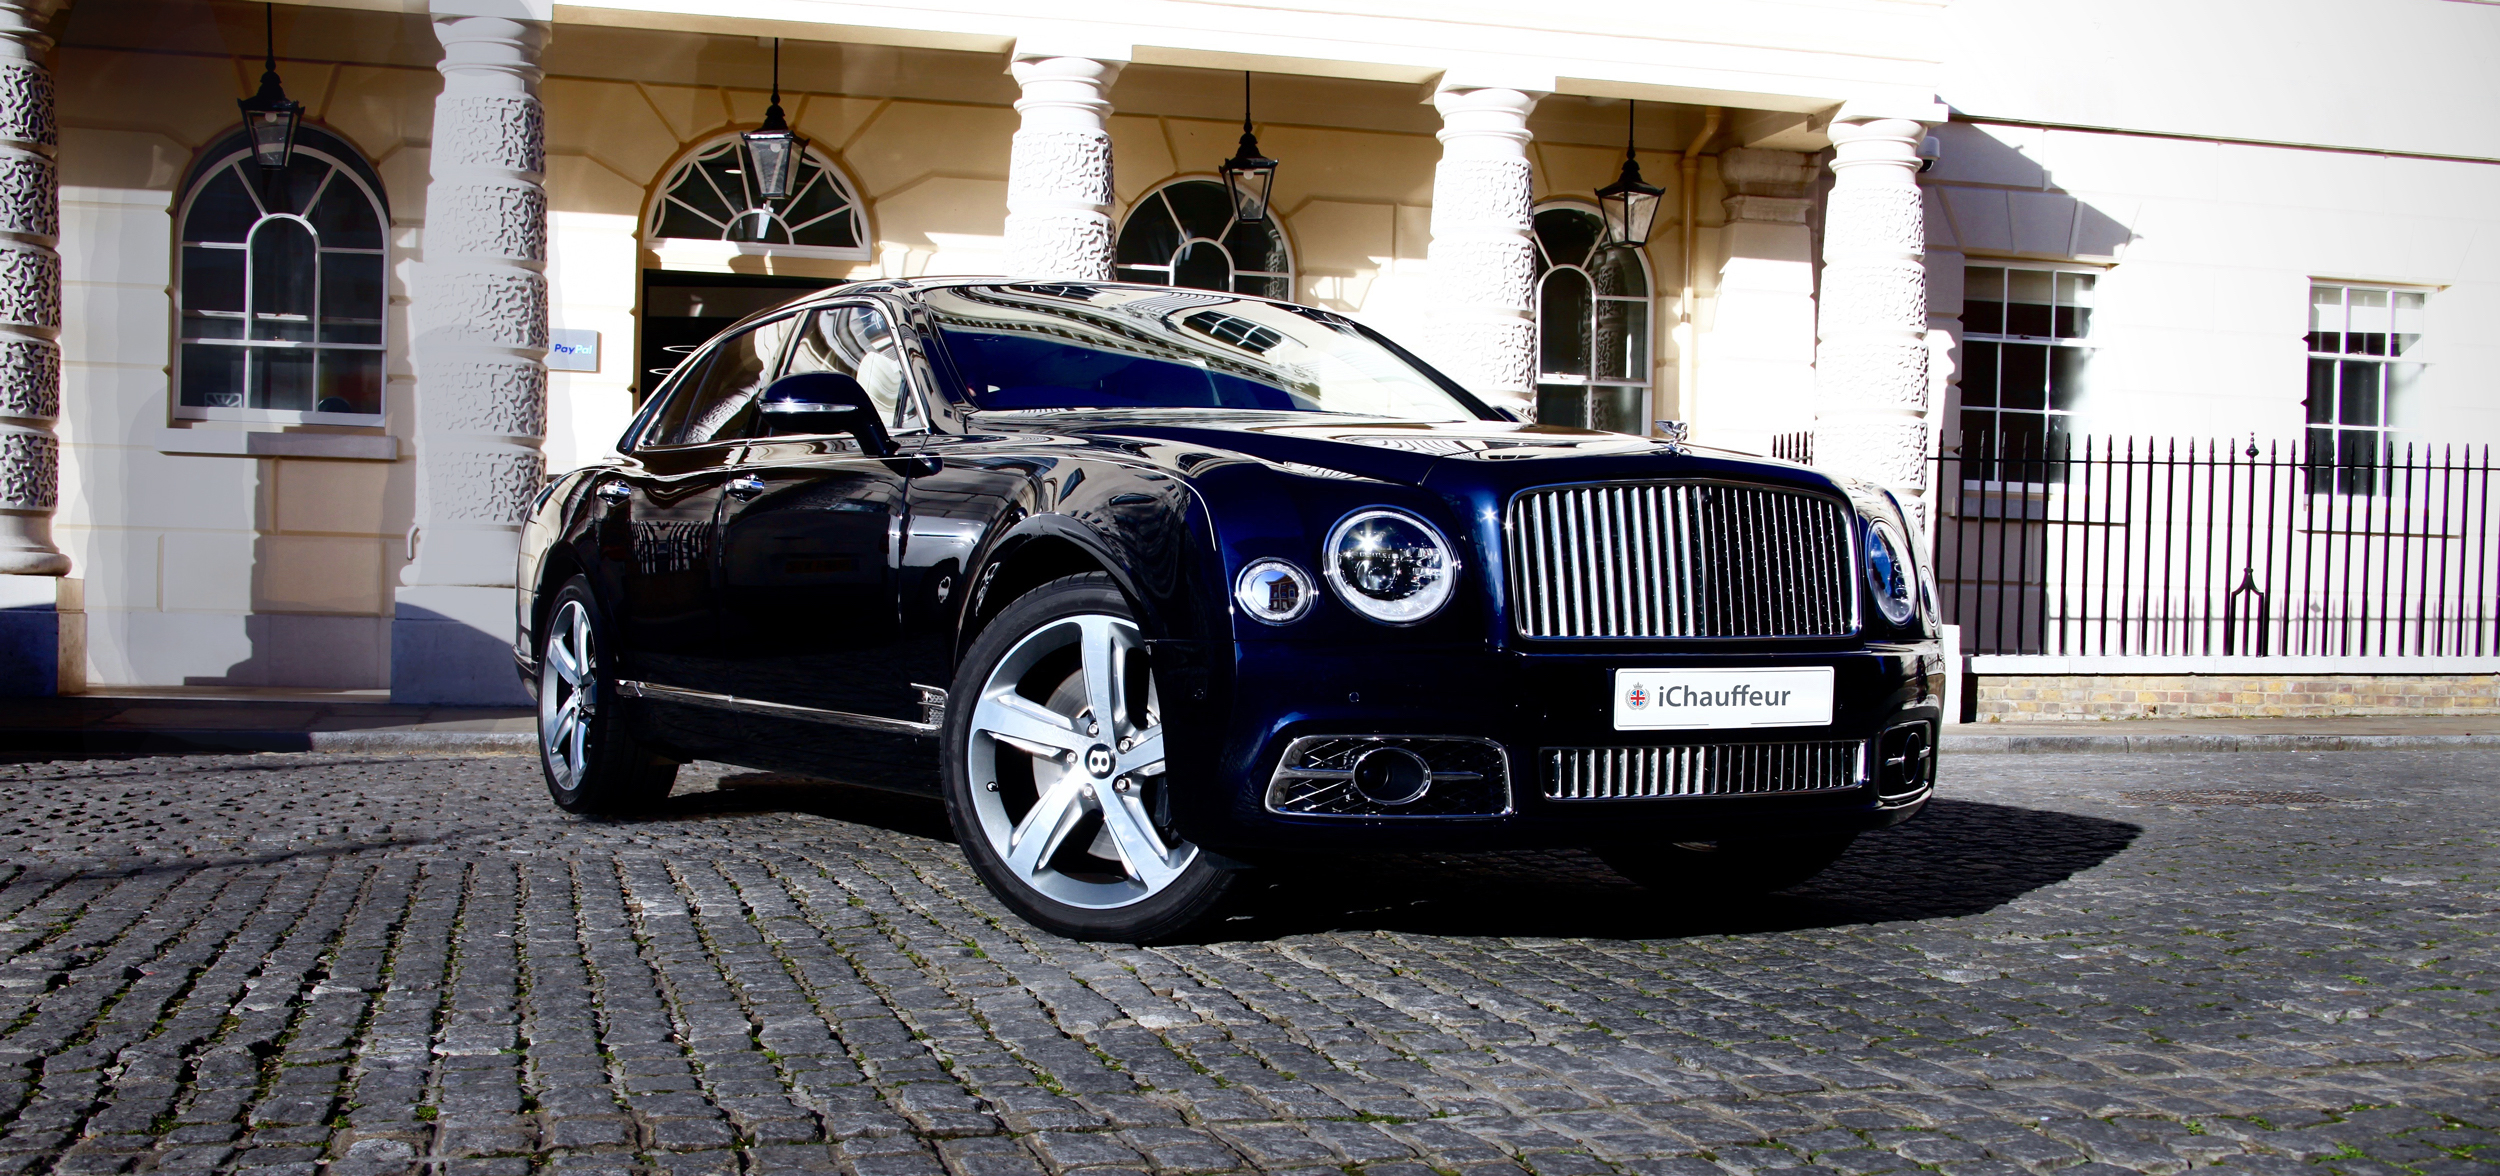 Bentley Mulsanne- Chauffeur